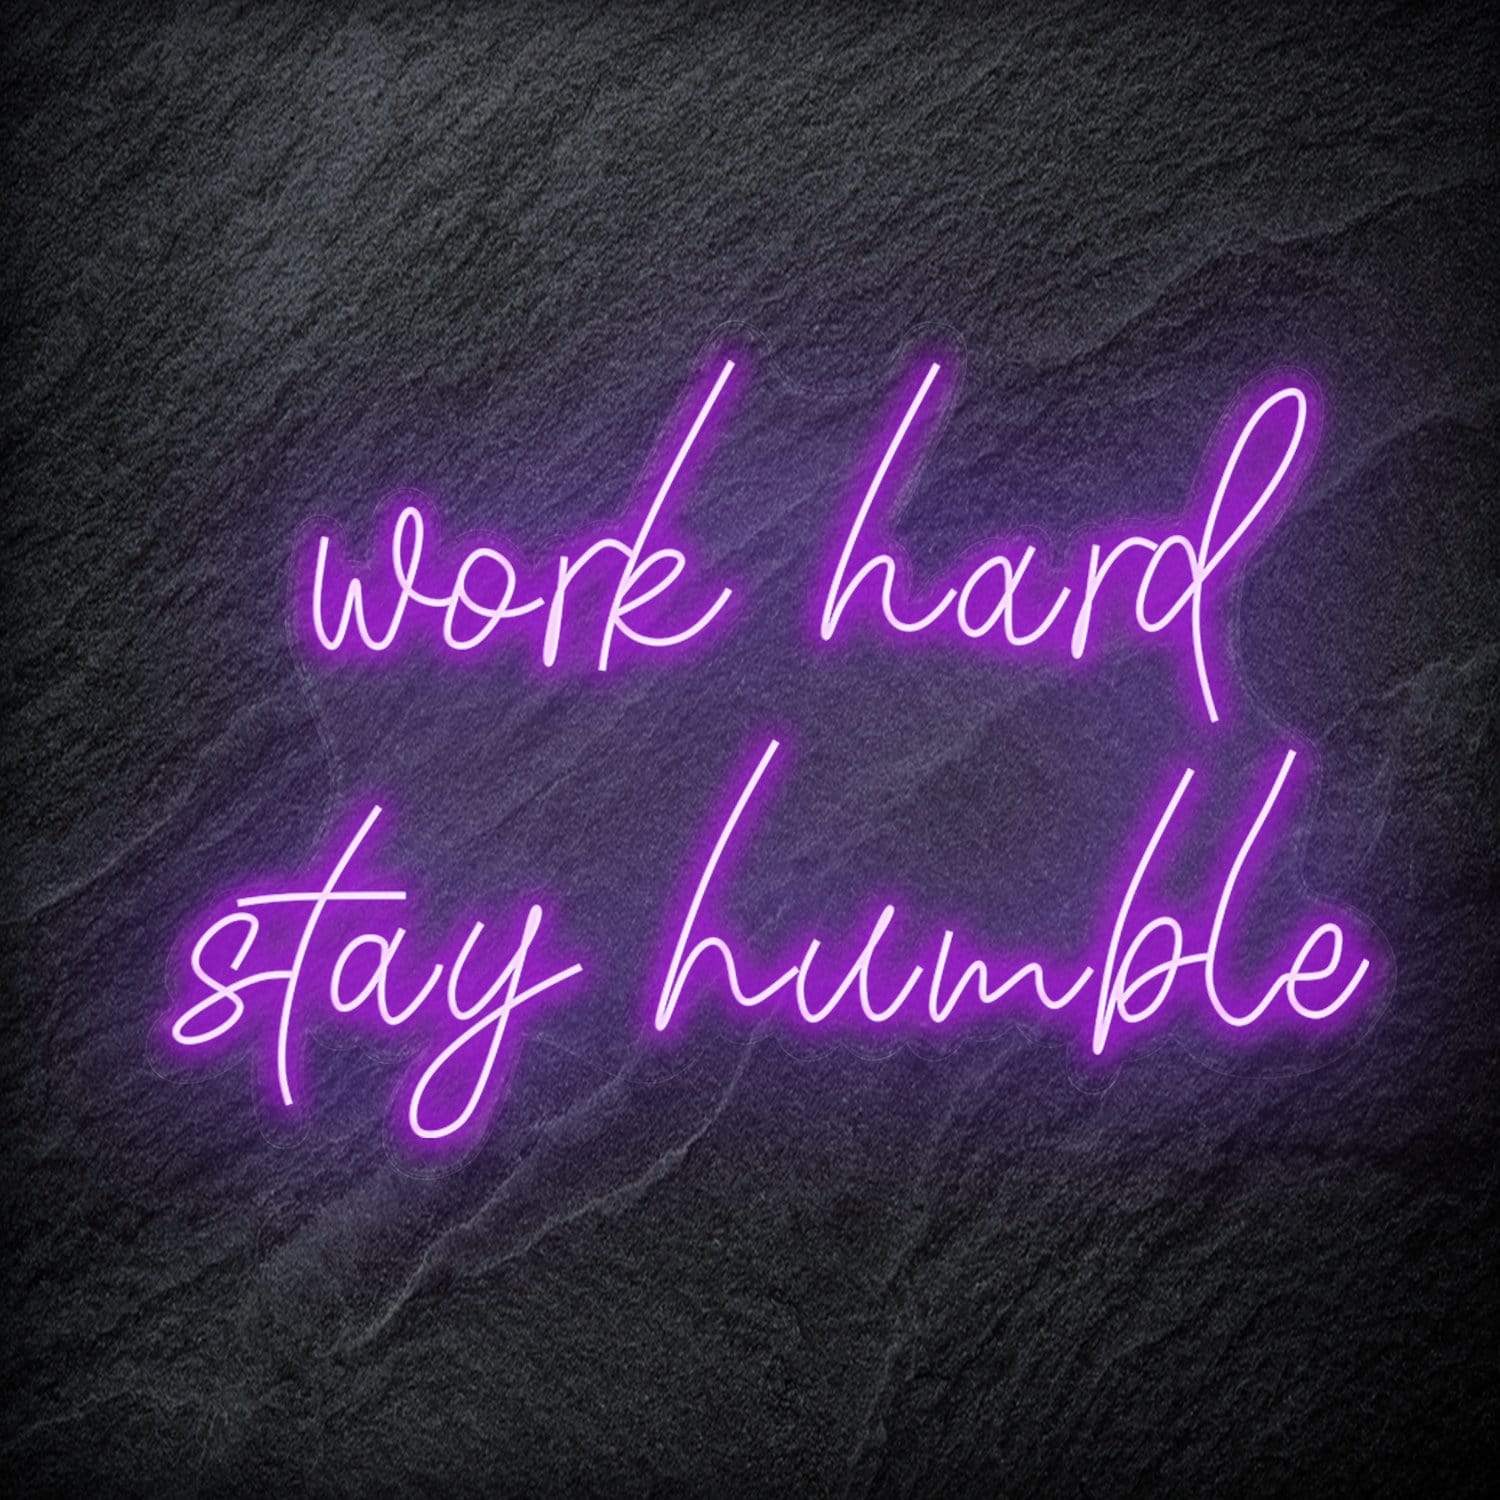 "Work Hard Stay Humble" LED Neon Schriftzug - NEONEVERGLOW